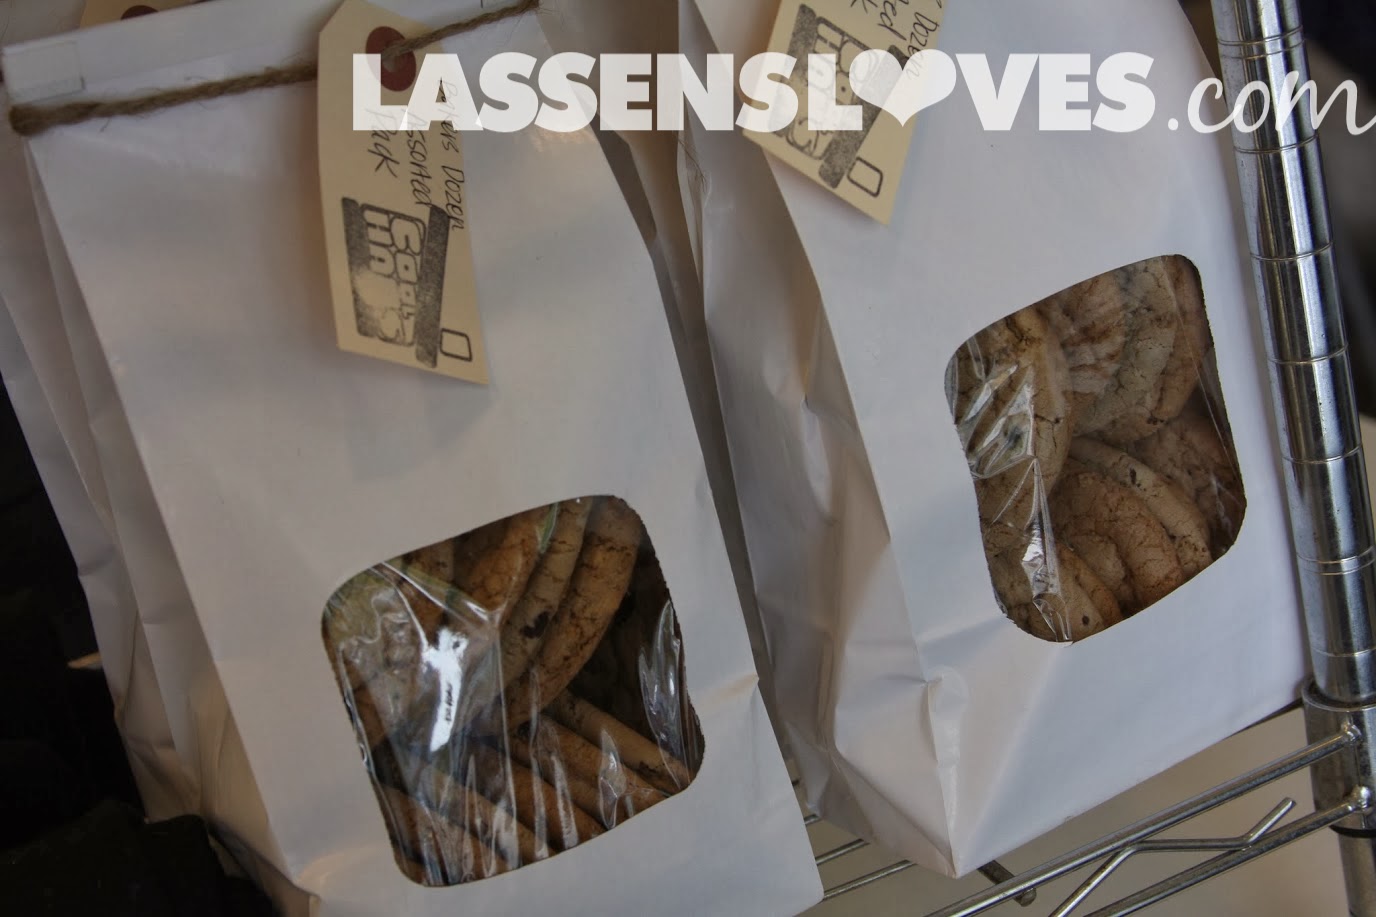 lassensloves.com, Lassen's, Lassens, Coolhaus+Ice+Cream+Sandwiches